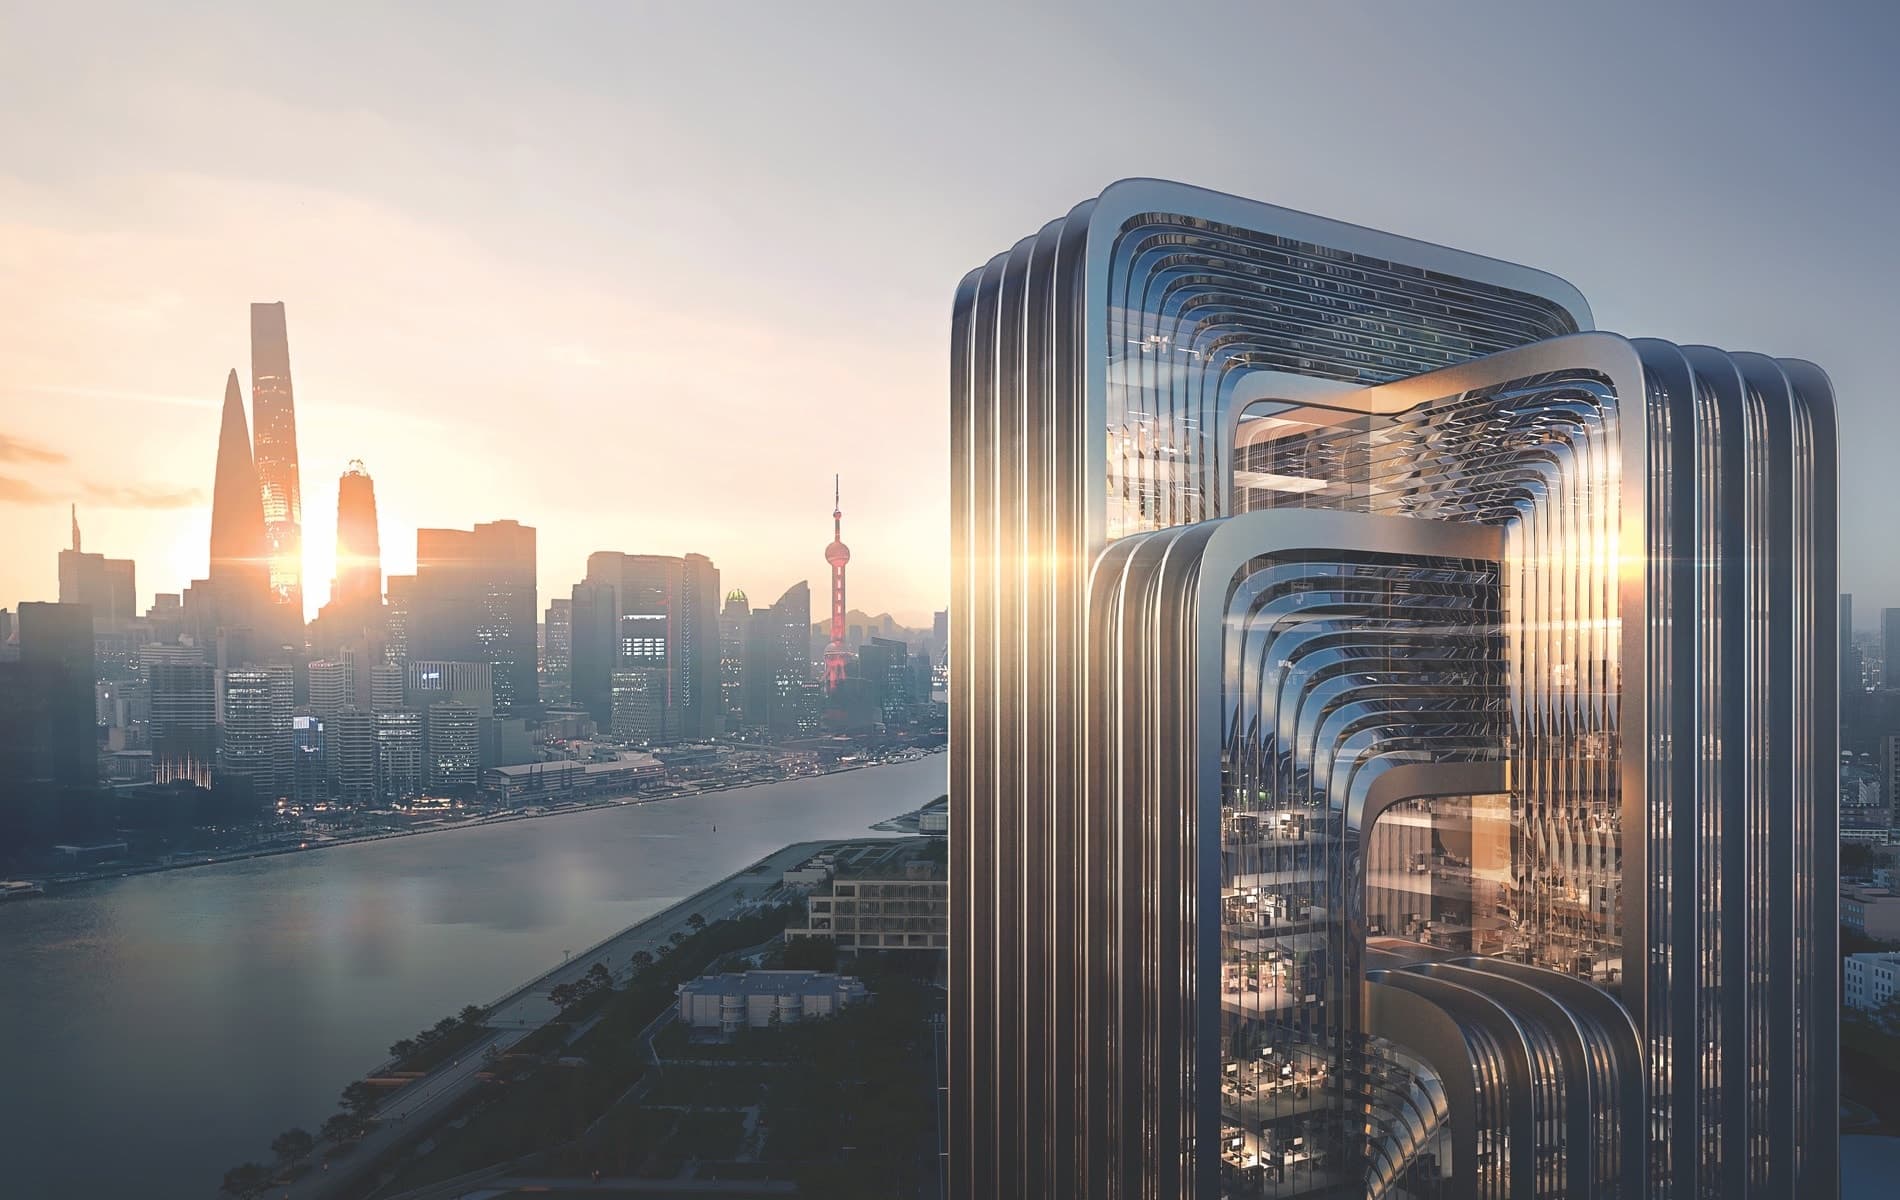 Negativ, Zaha Hadid Architects, China Energy Conservation and Environmental Protection Group, Three Star Green Building Rating